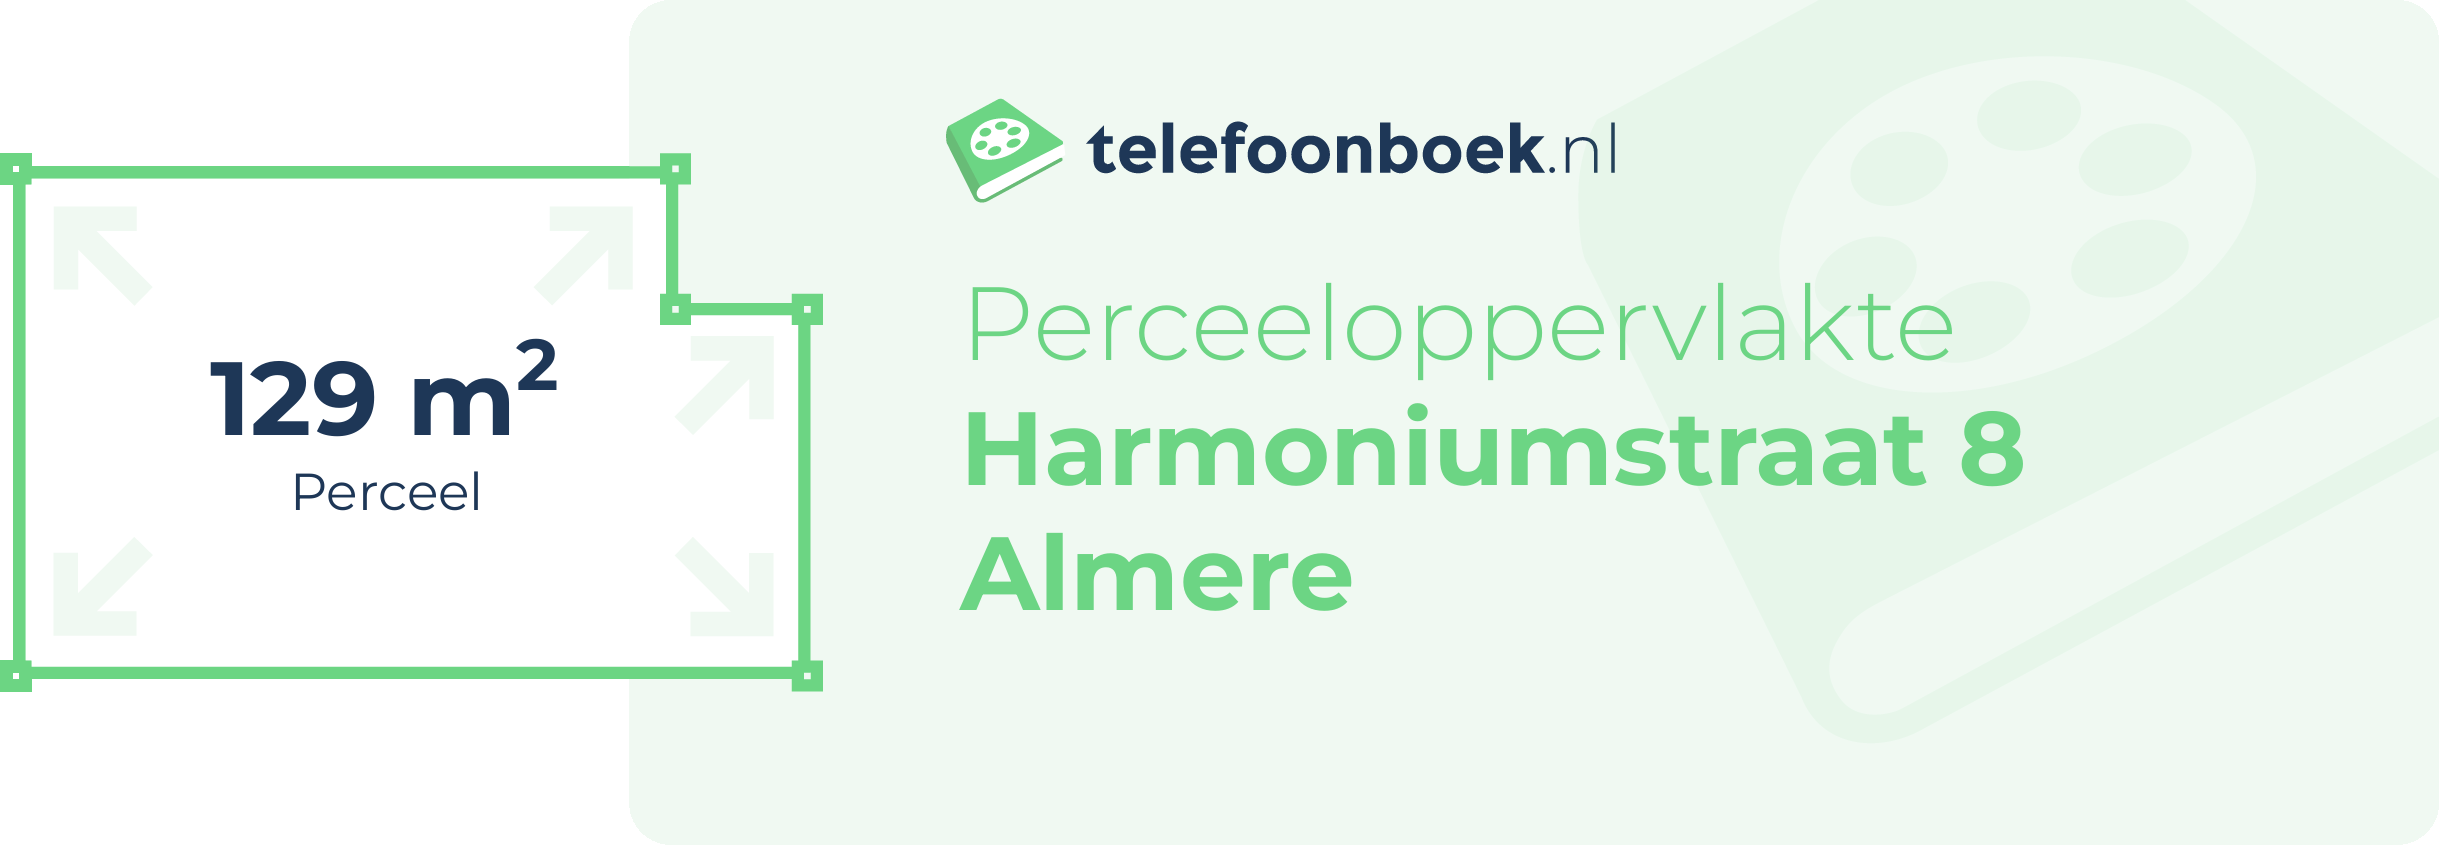 Perceeloppervlakte Harmoniumstraat 8 Almere